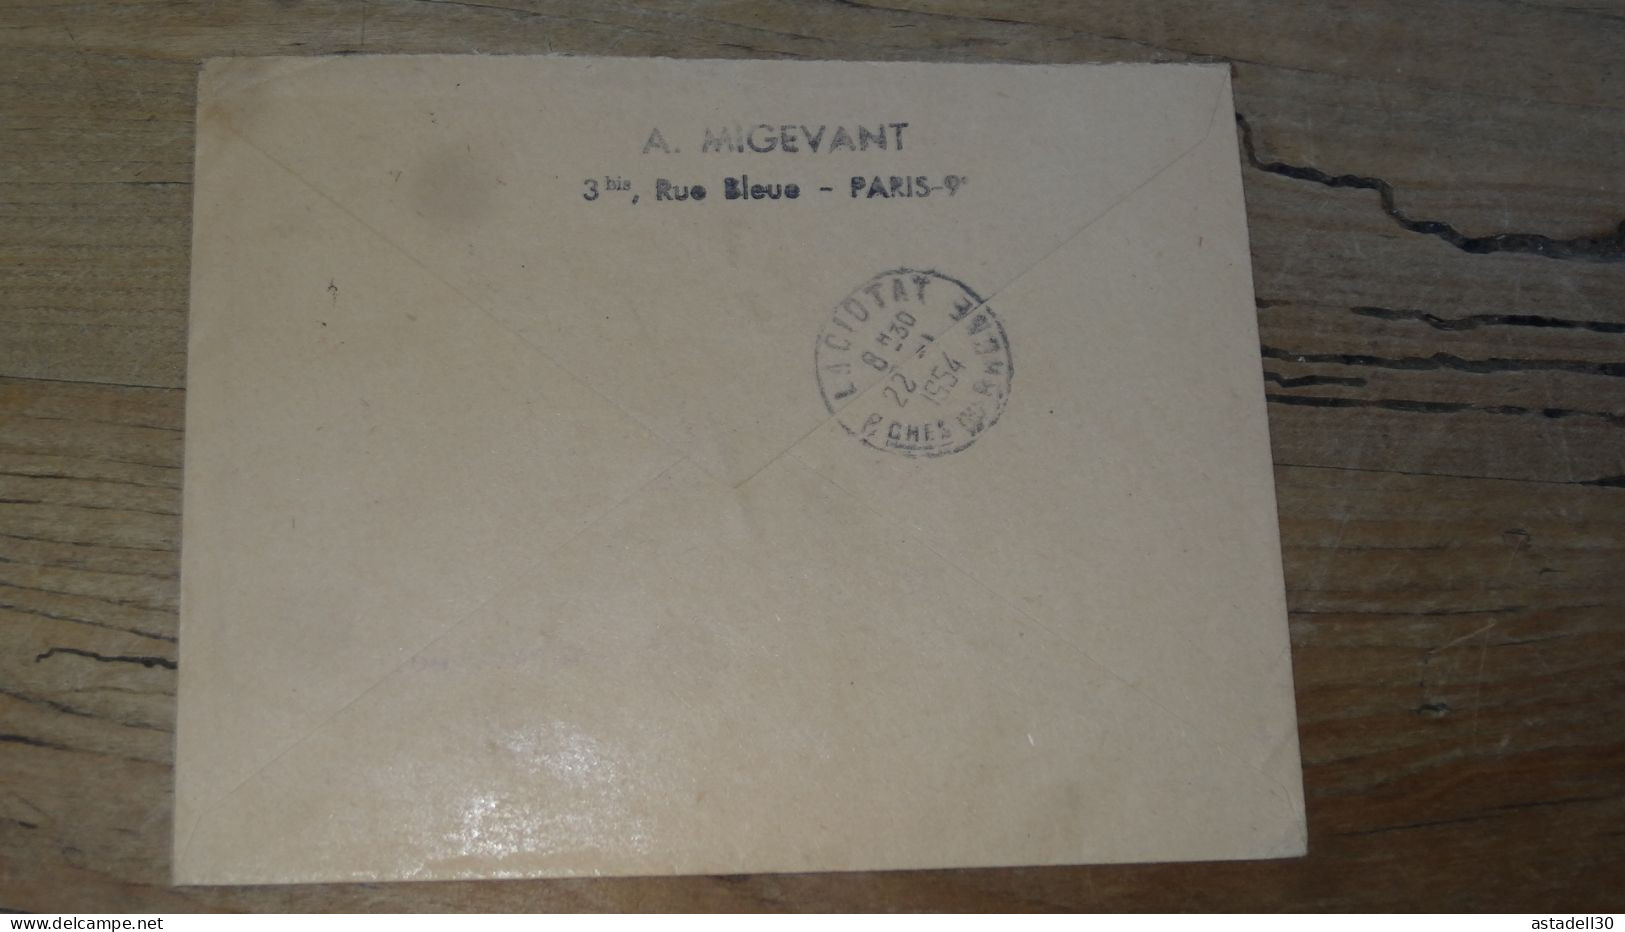 Enveloppe Recommandée PARIS Pour LA CIOTAT - 1954  ............BOITE1.......... 487 - 1921-1960: Periodo Moderno